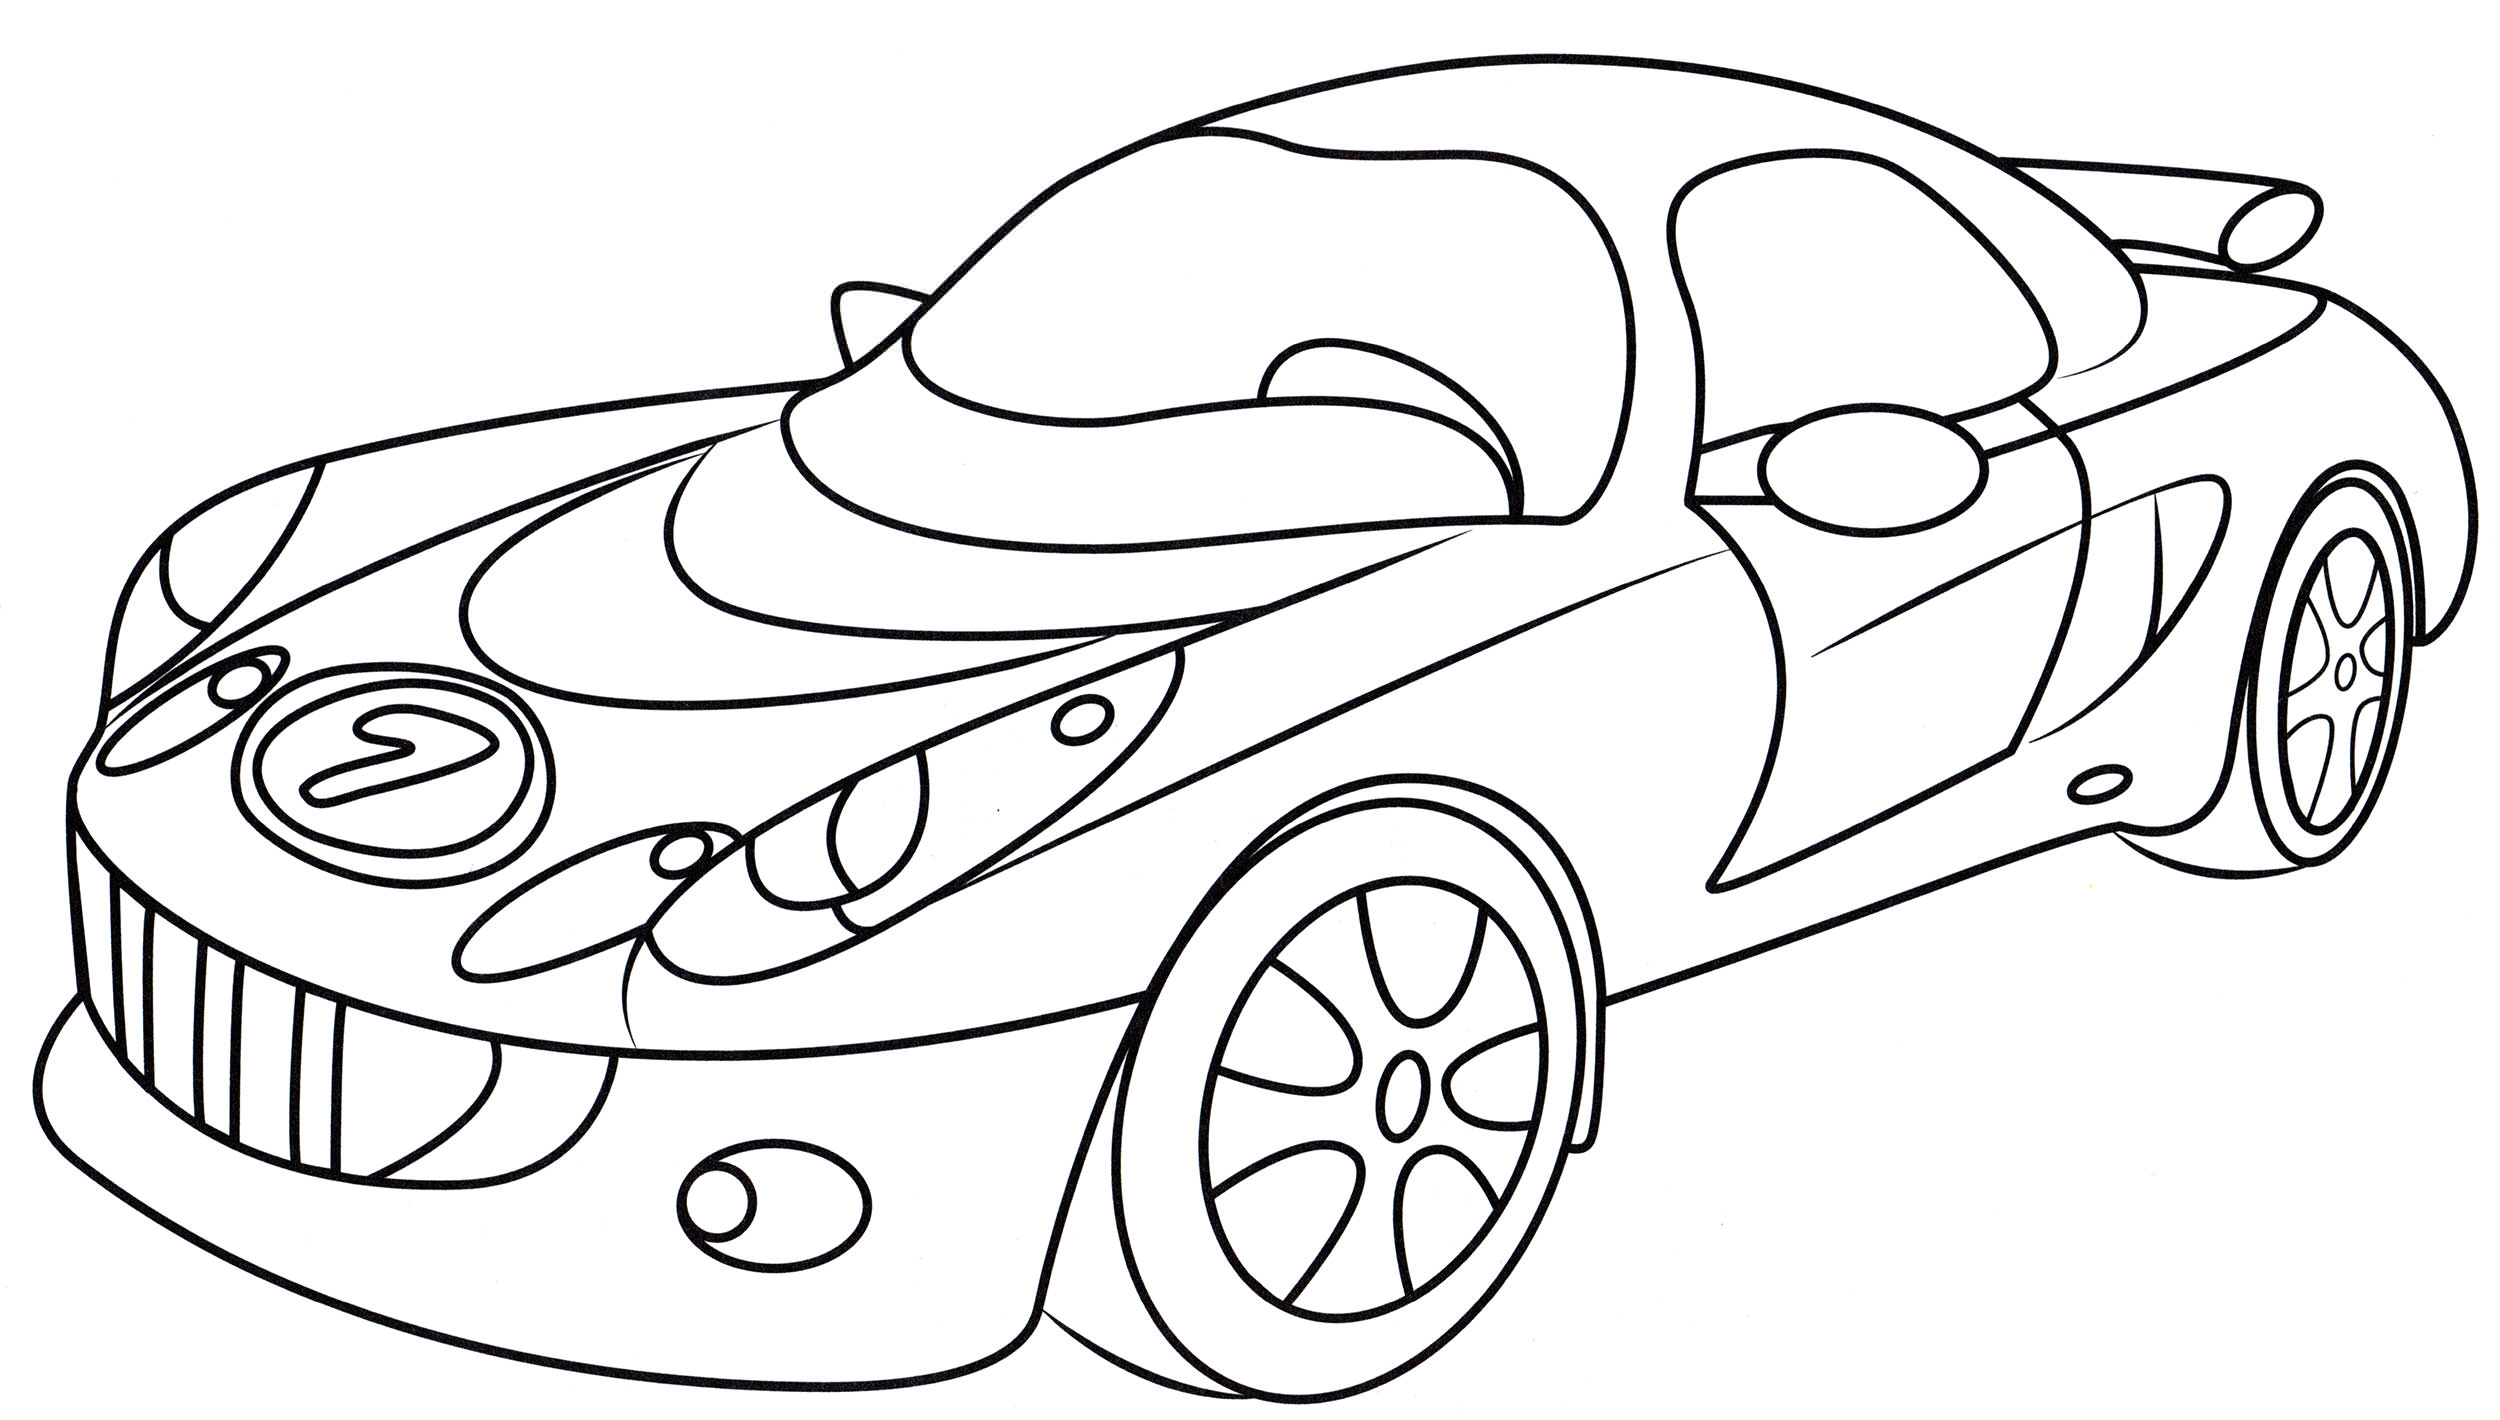 Розмальовка Яскравий гоночний авто